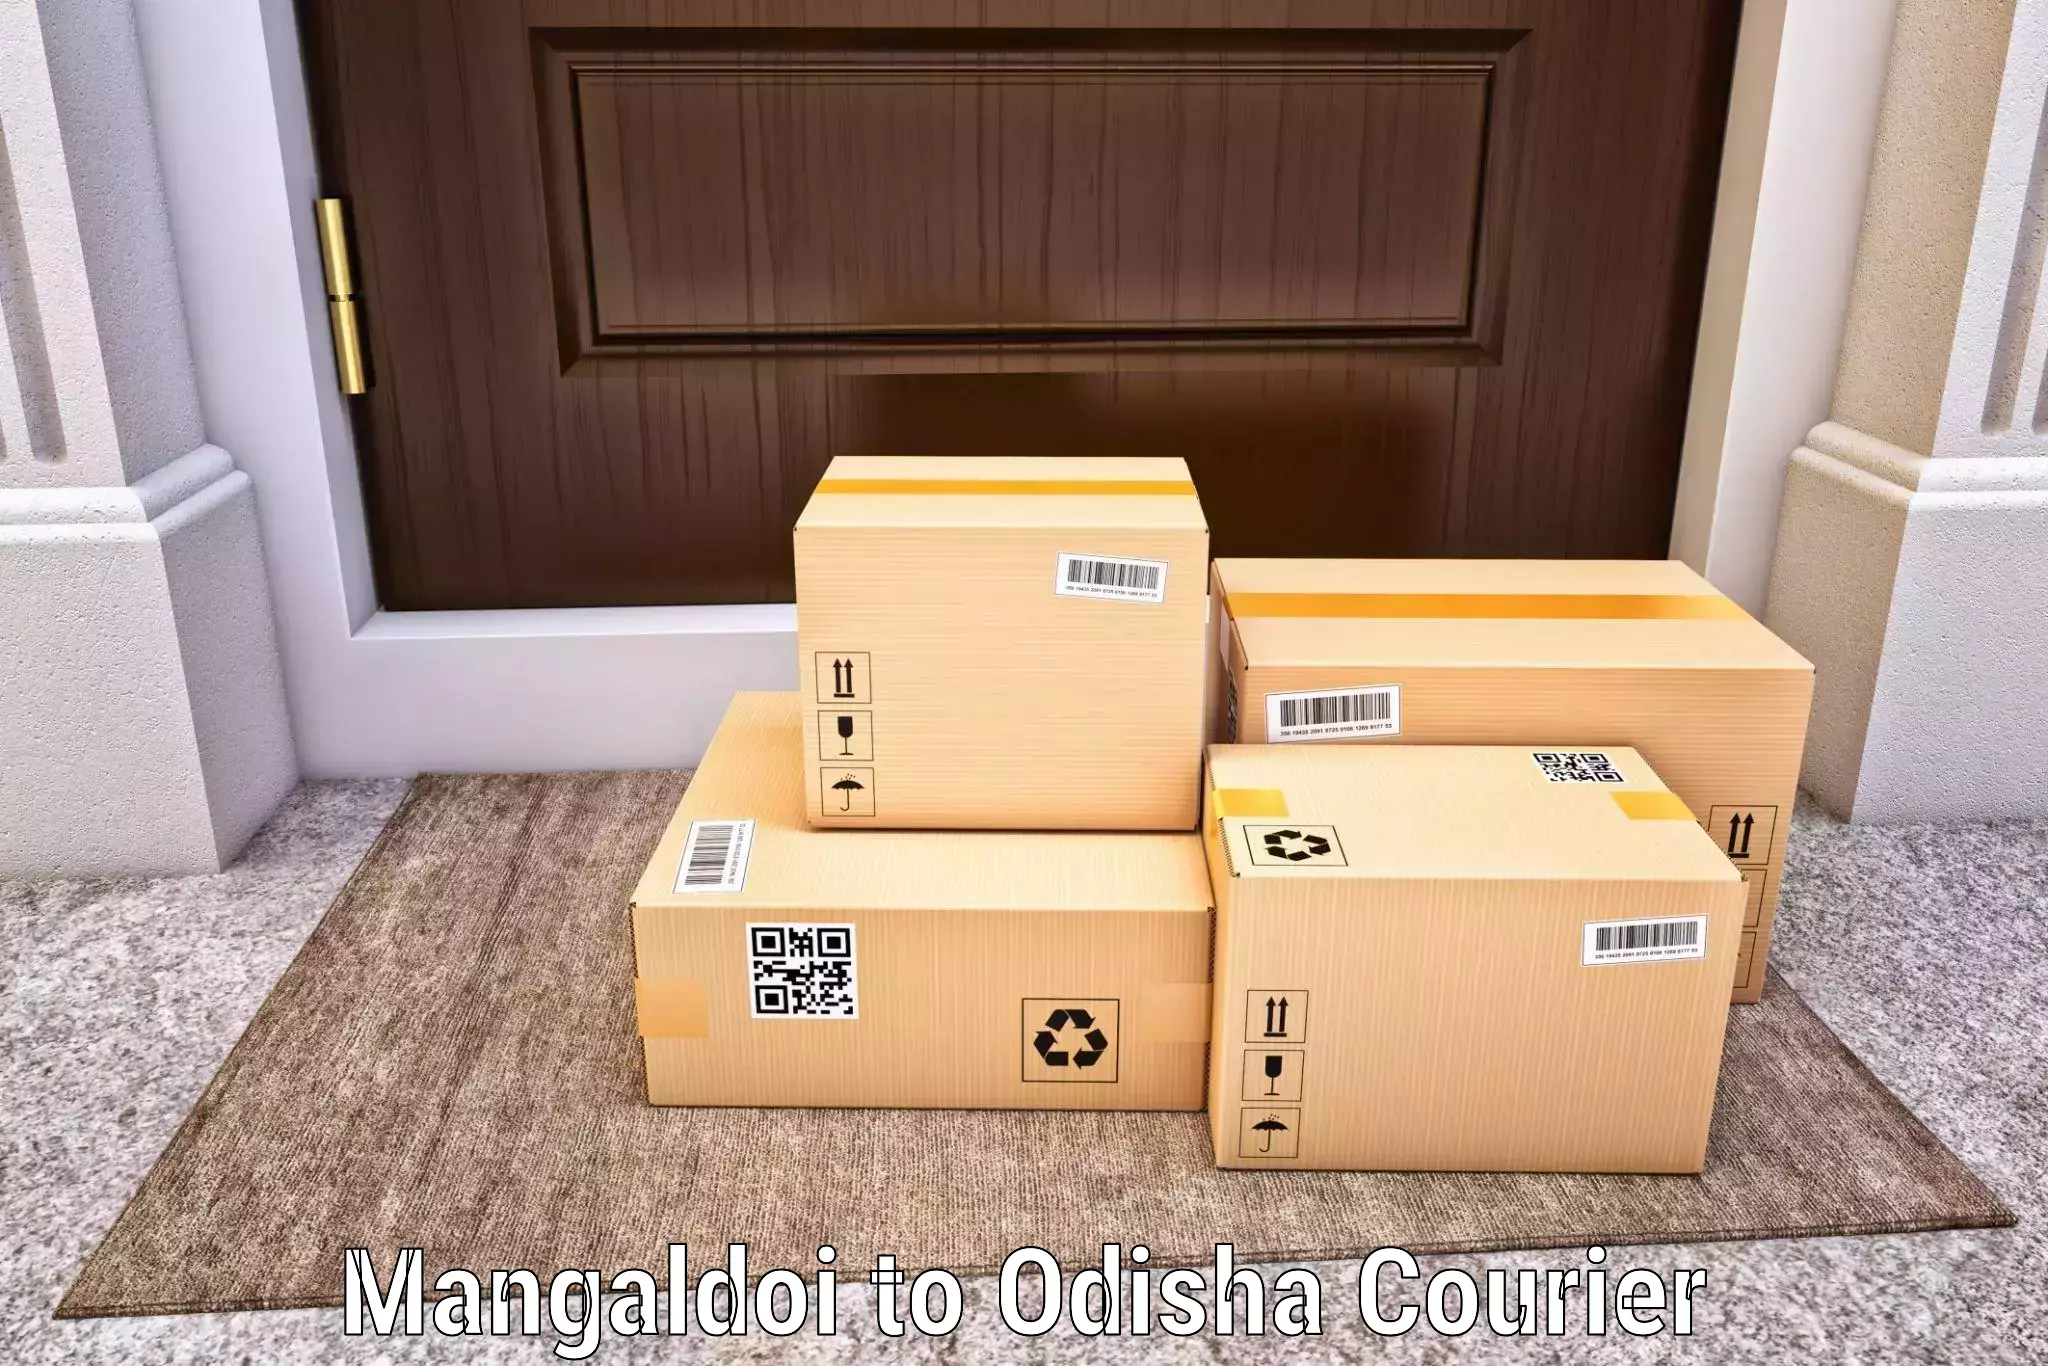 Logistics and distribution Mangaldoi to Dandisahi